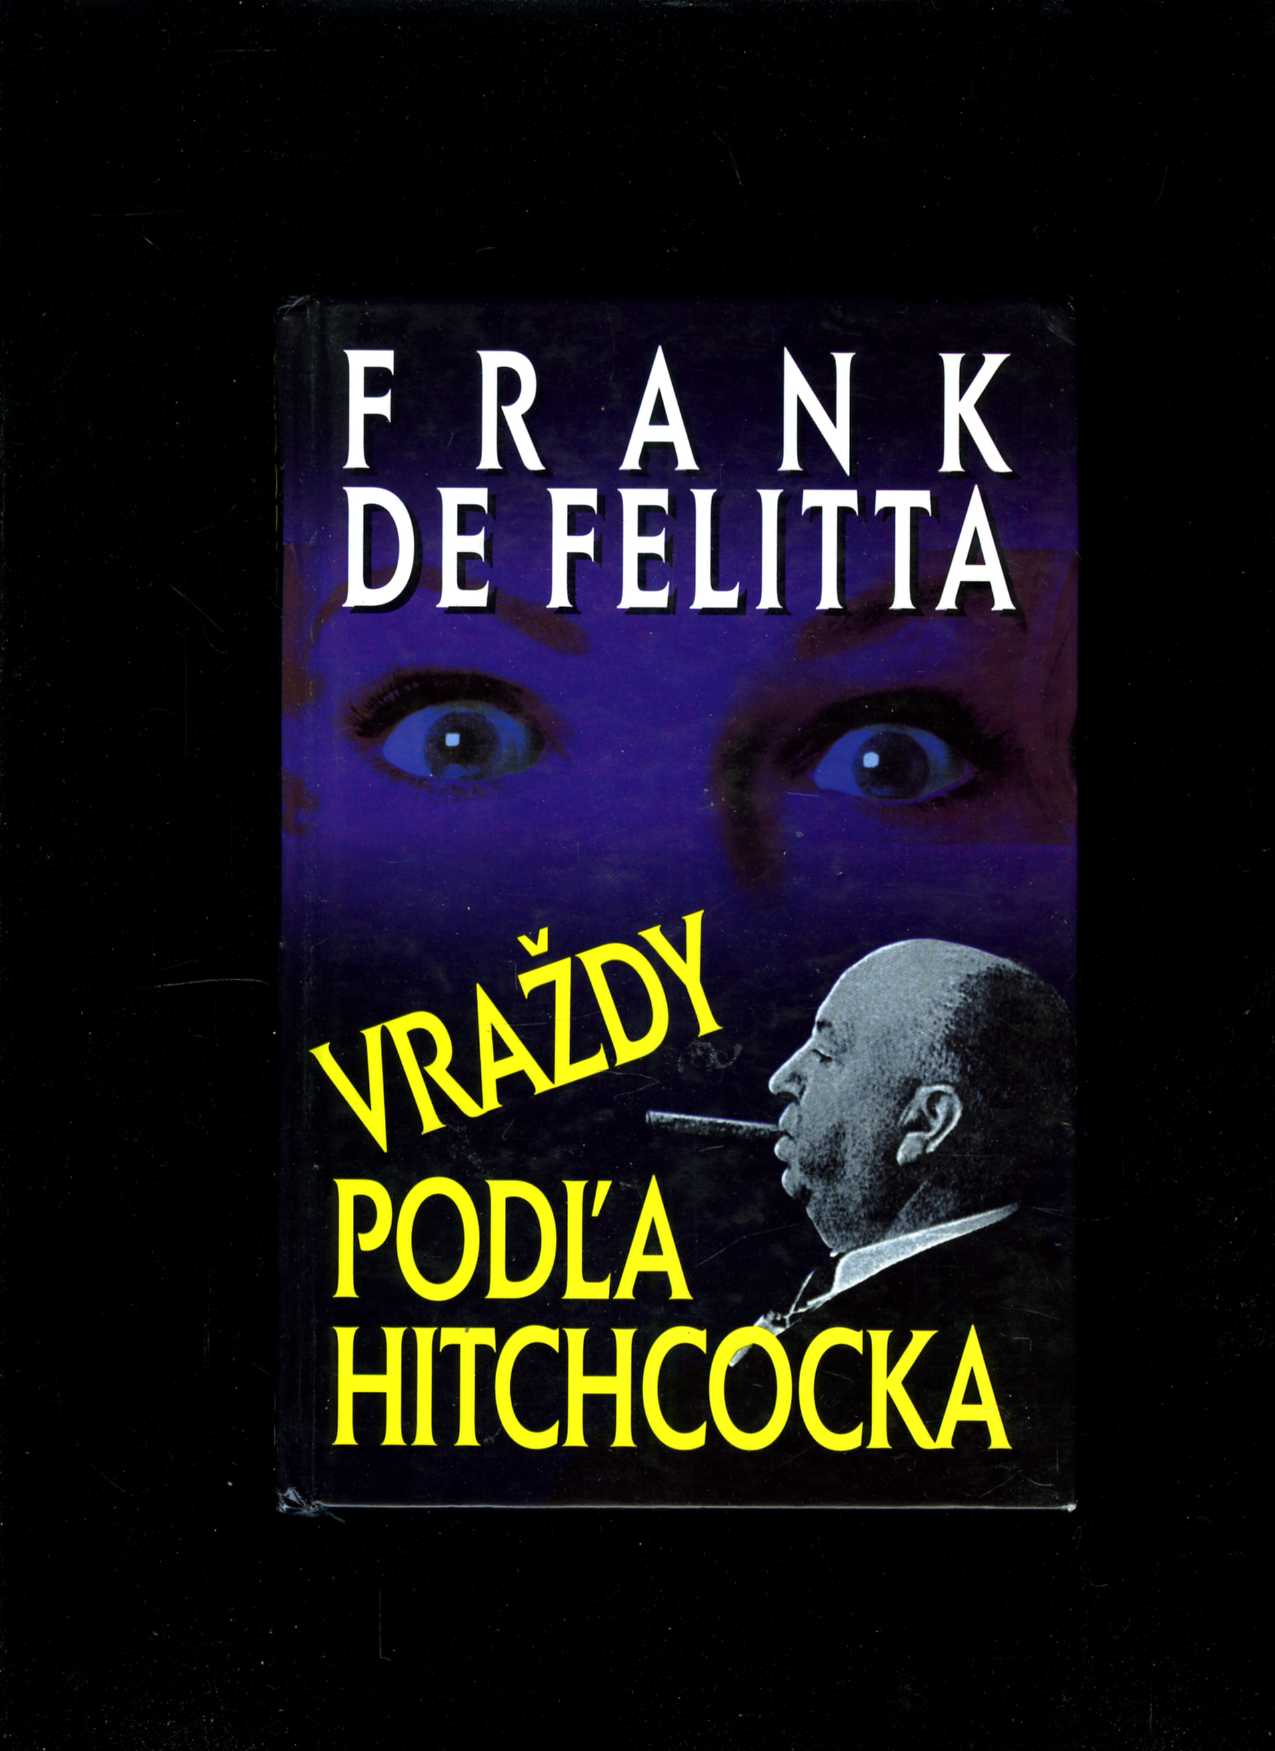 Vraždy podľa Hitchcocka (Frank de Felitta)